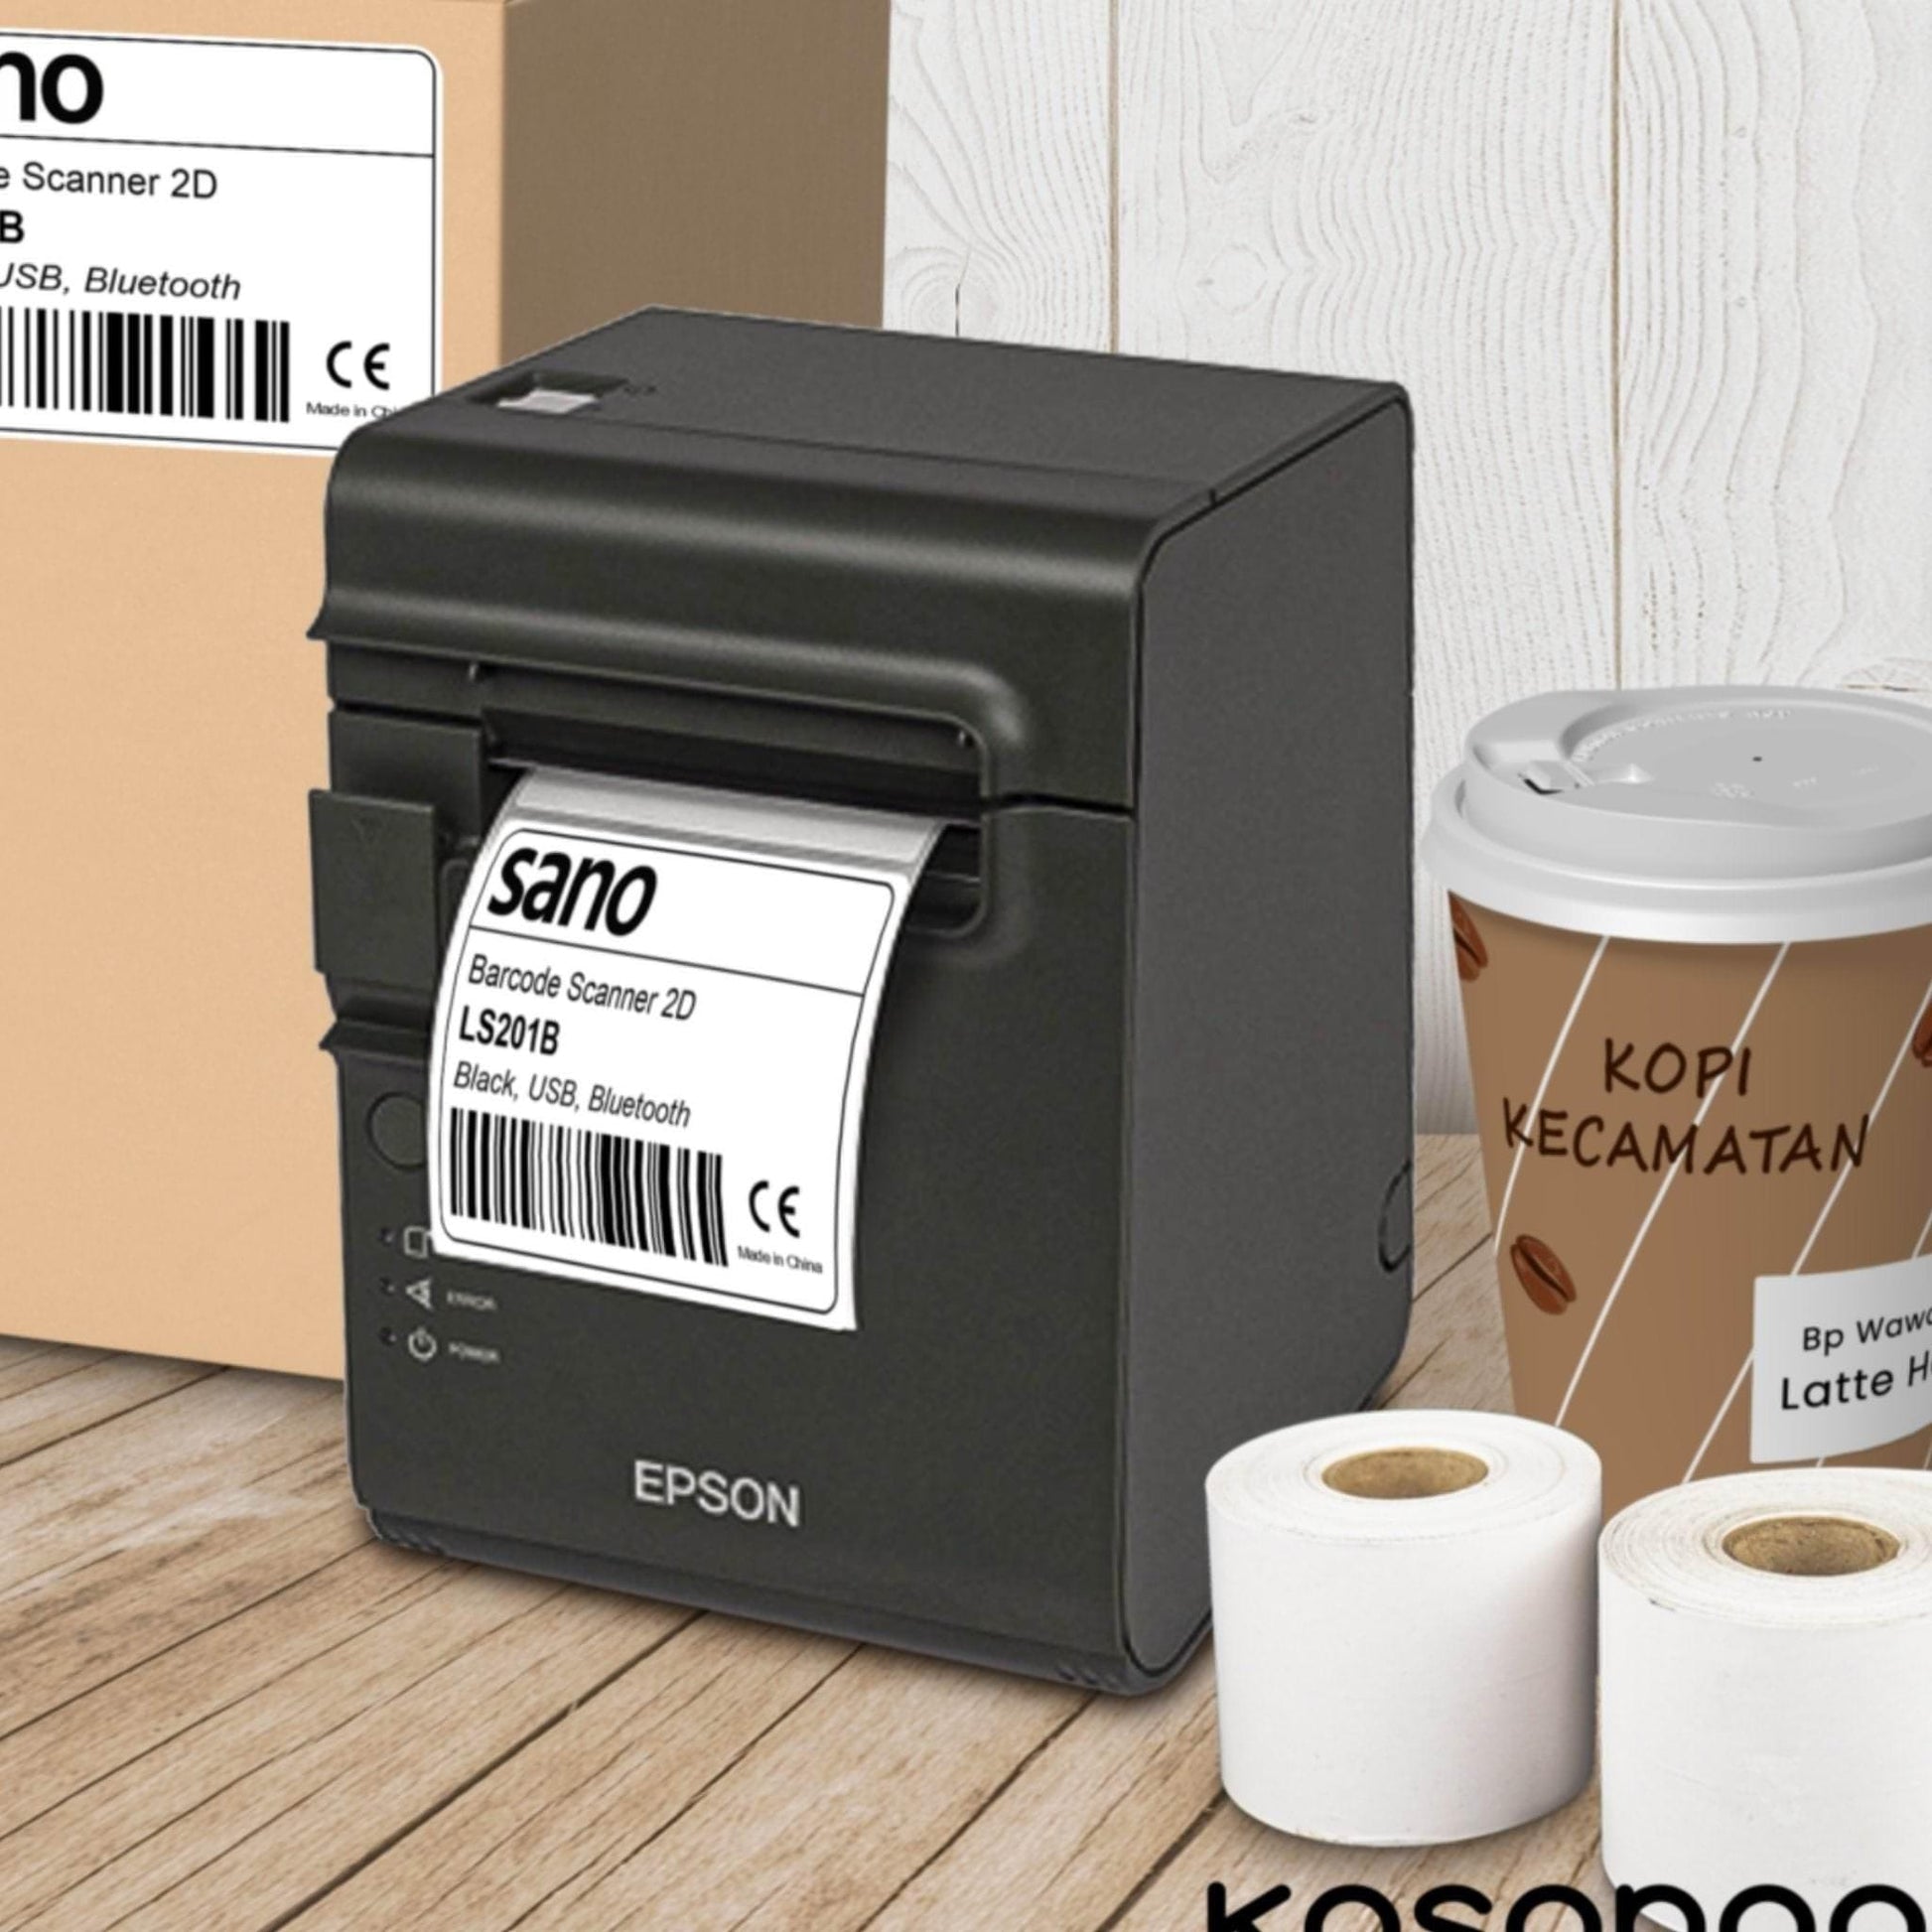 Receipt Printer - Epson TM-L90 - Neotech